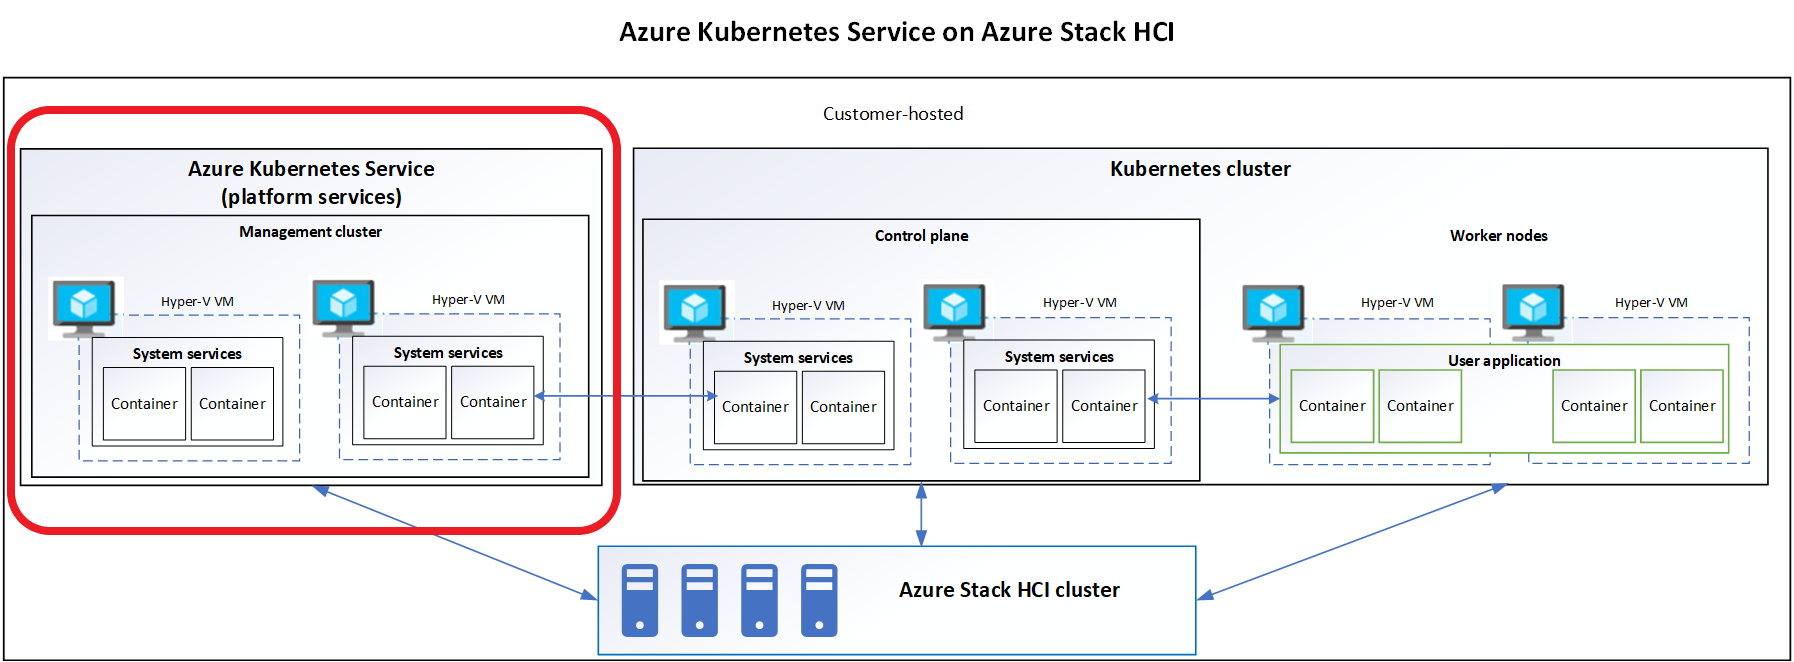 Azure Stack HCI - Part IX - Azure Kubernetes Service Deployment